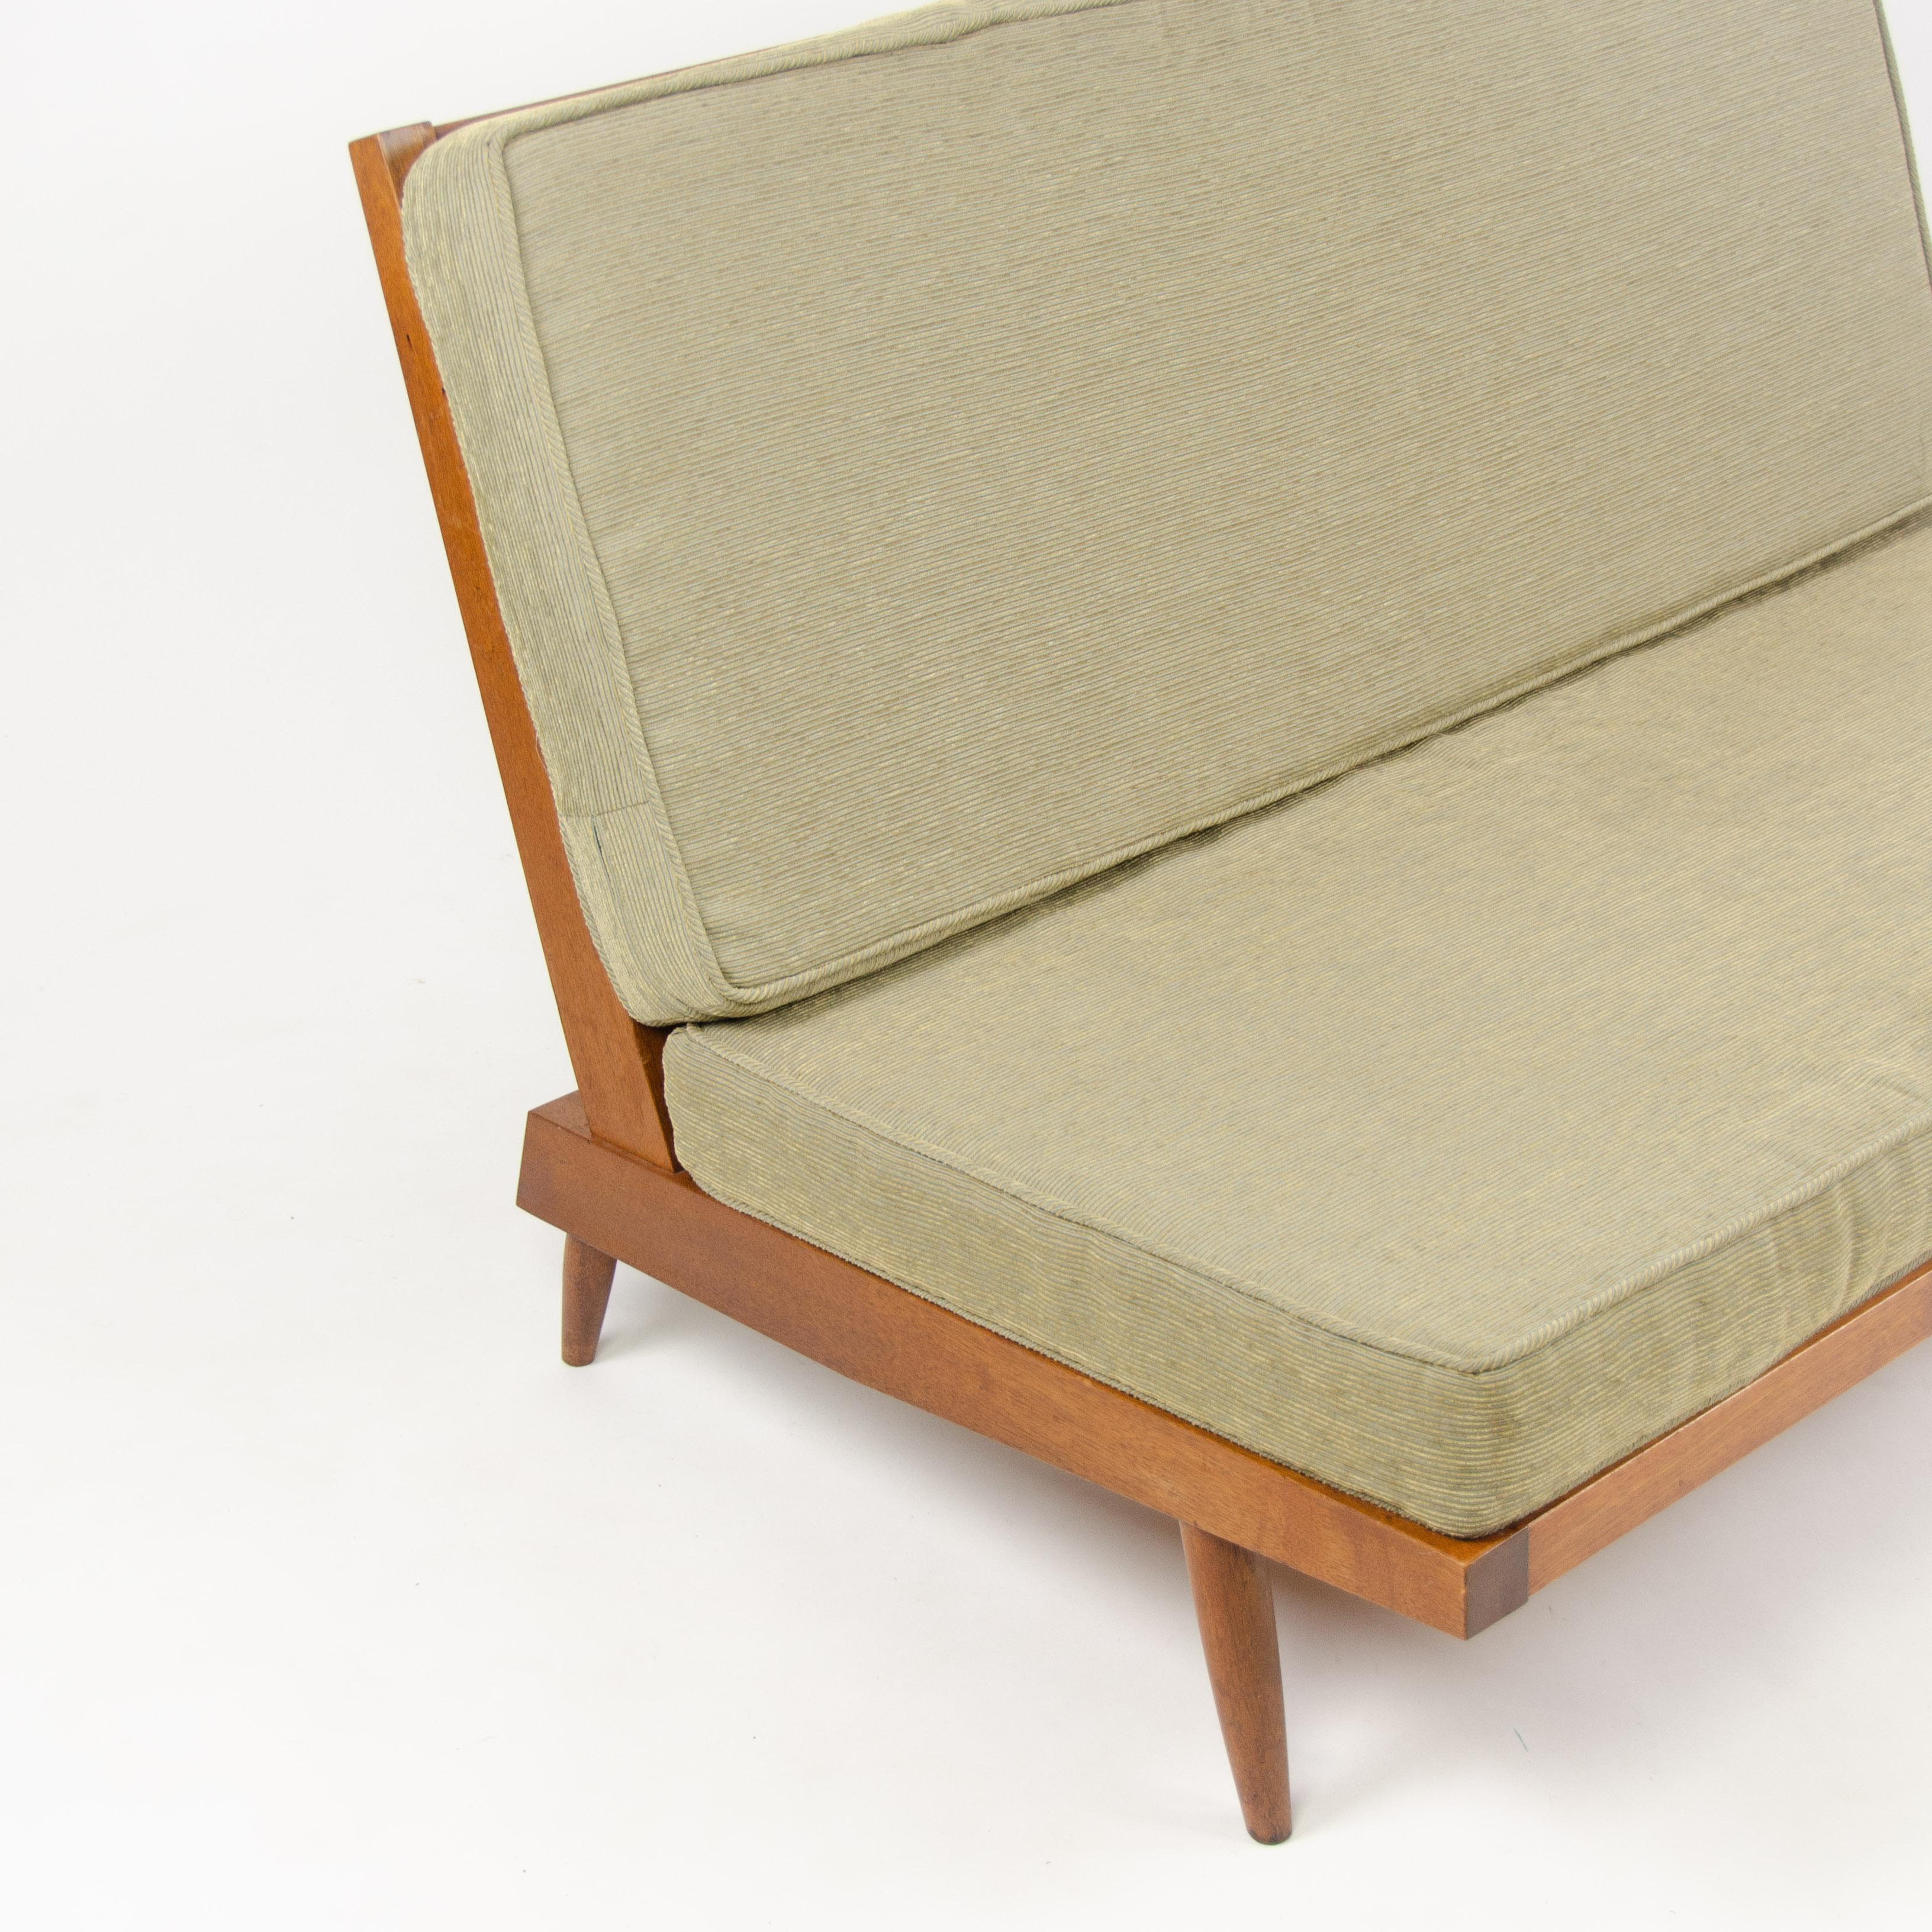 1960s George Nakashima Studio American Walnut Settee / Loveseat in Green Fabric For Sale 1